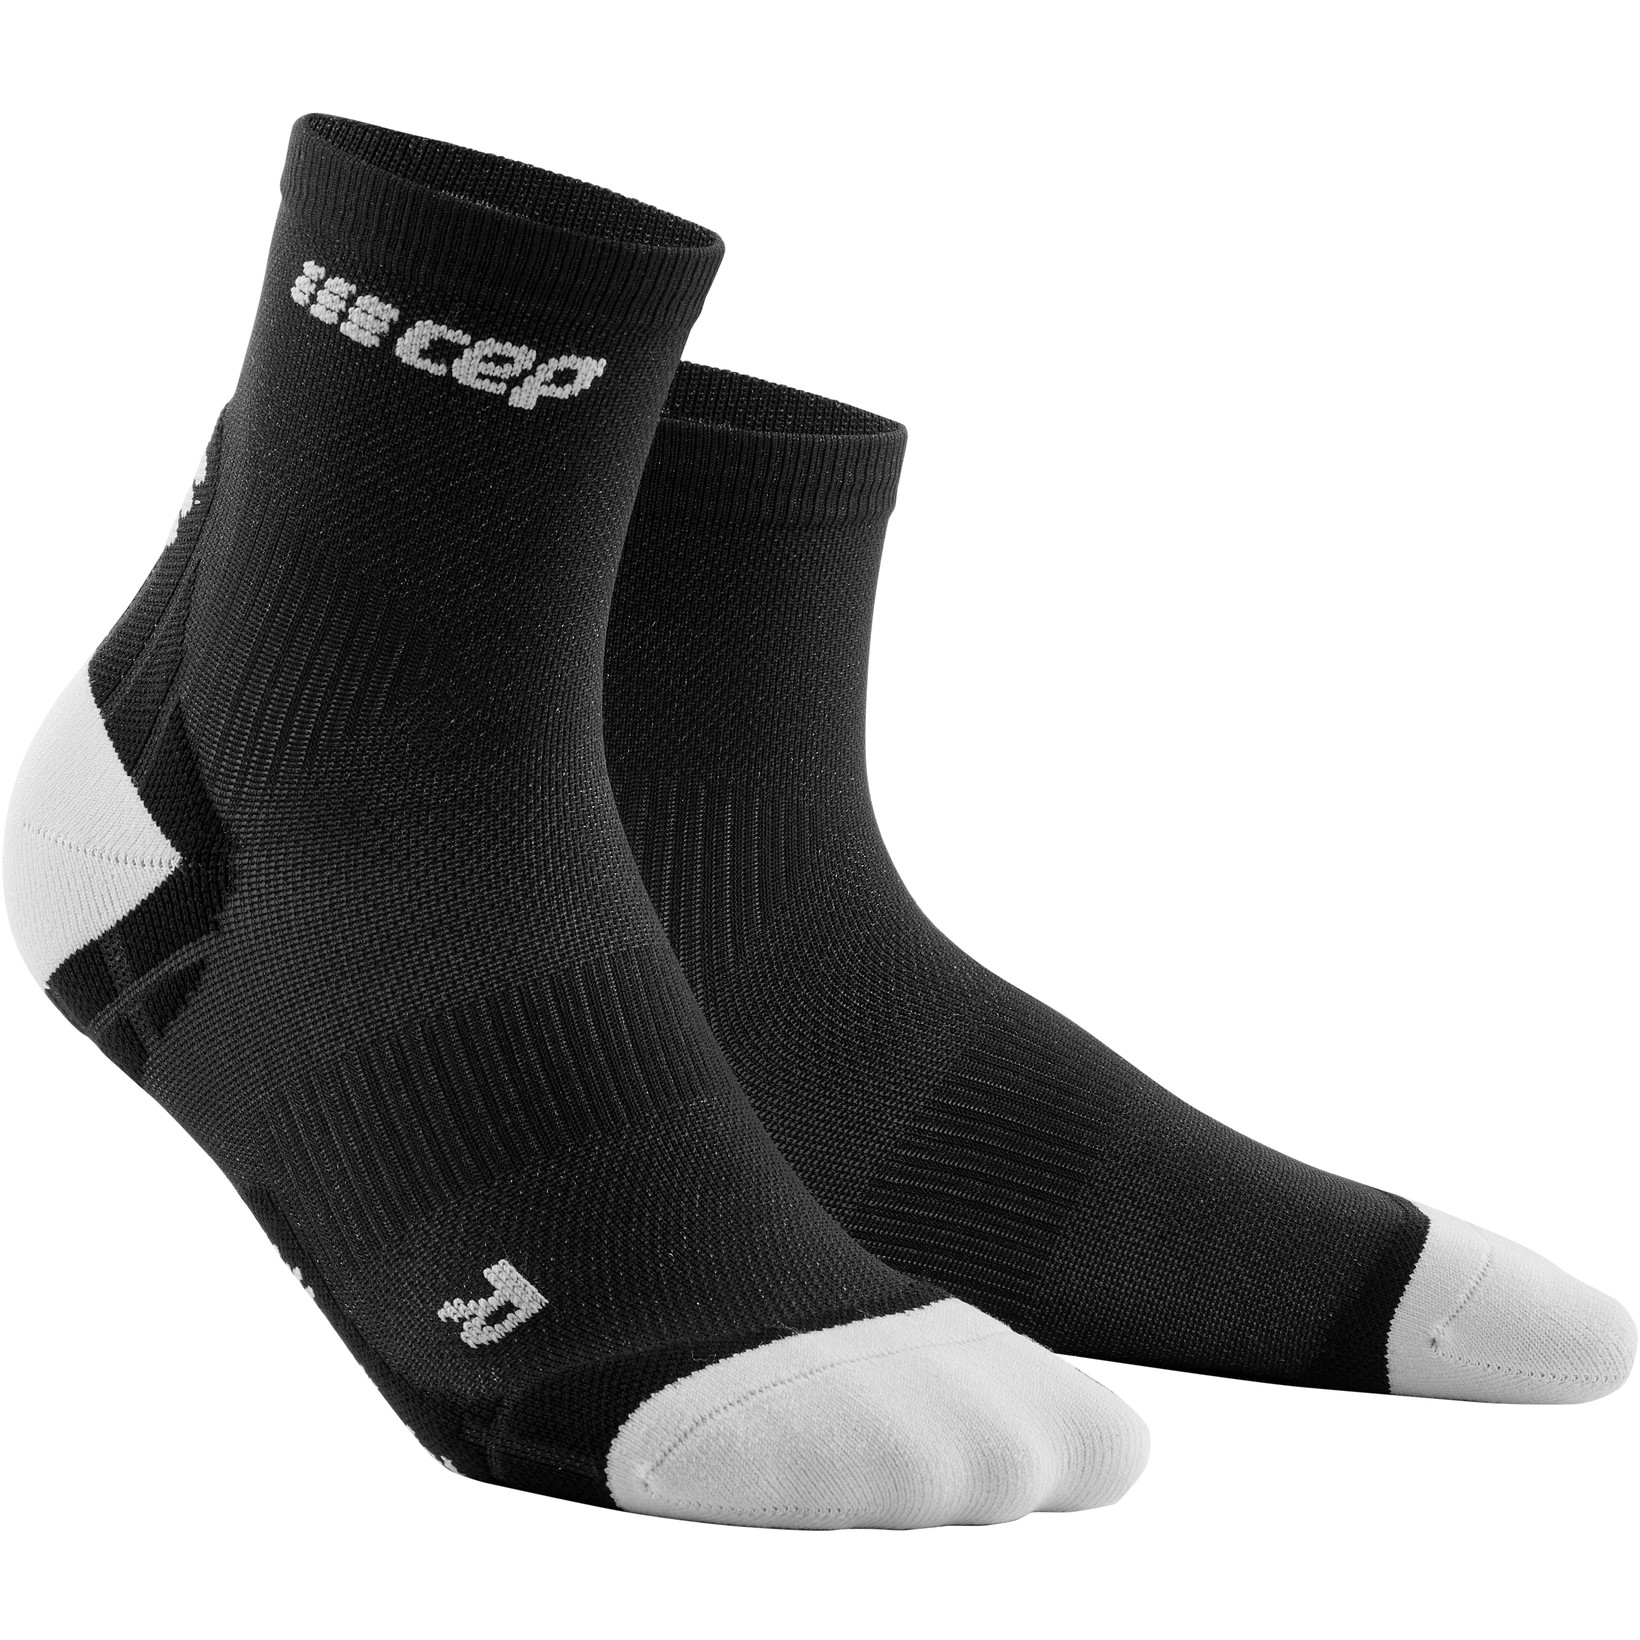 Picture of CEP Ultralight Short Compression Socks - black/light grey